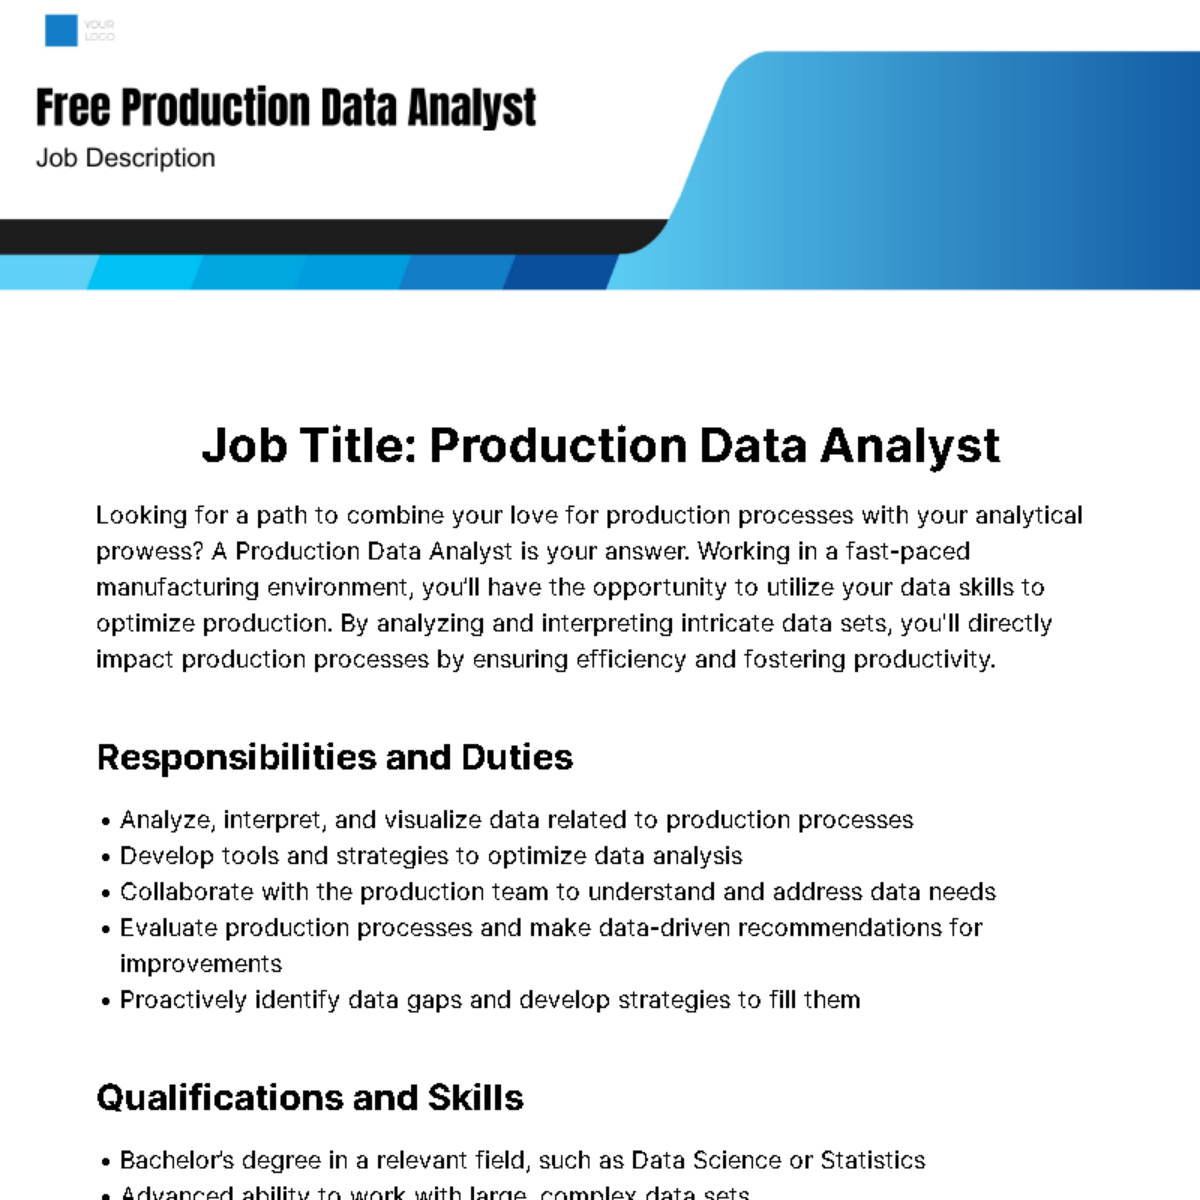 Free Production Data Analyst Job Description Template